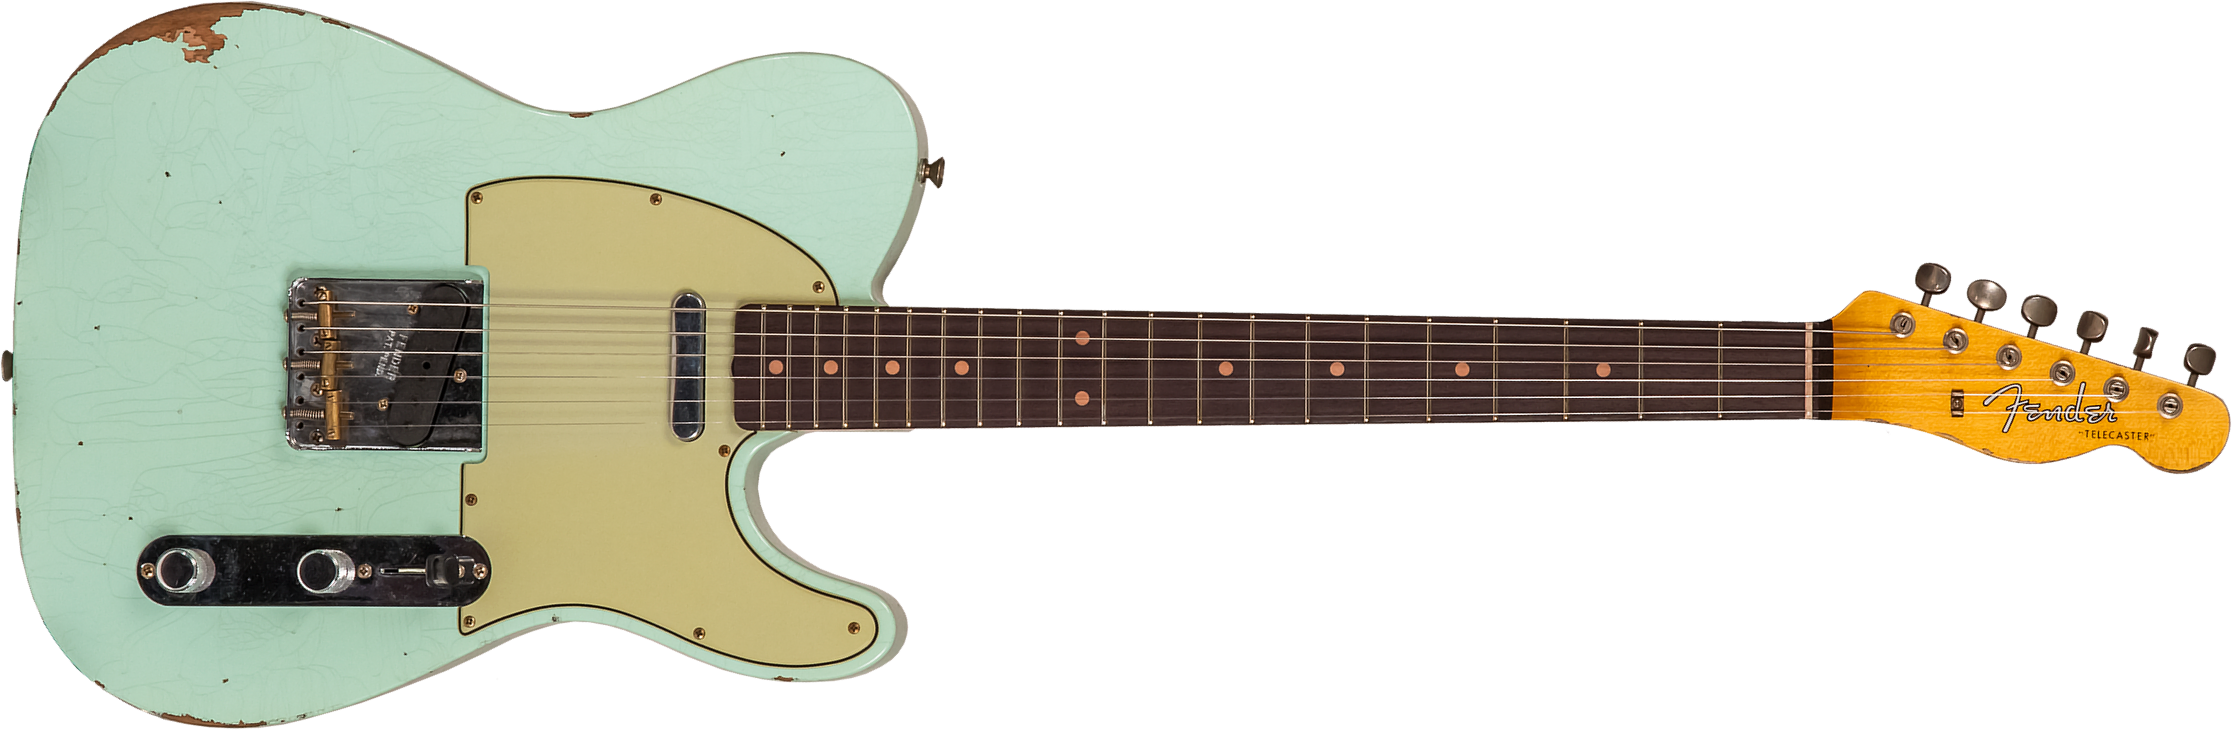 Fender Custom Shop Tele 1961 2s Ht Rw #cz565334 - Relic Faded Surf Green - Guitarra eléctrica con forma de tel - Main picture